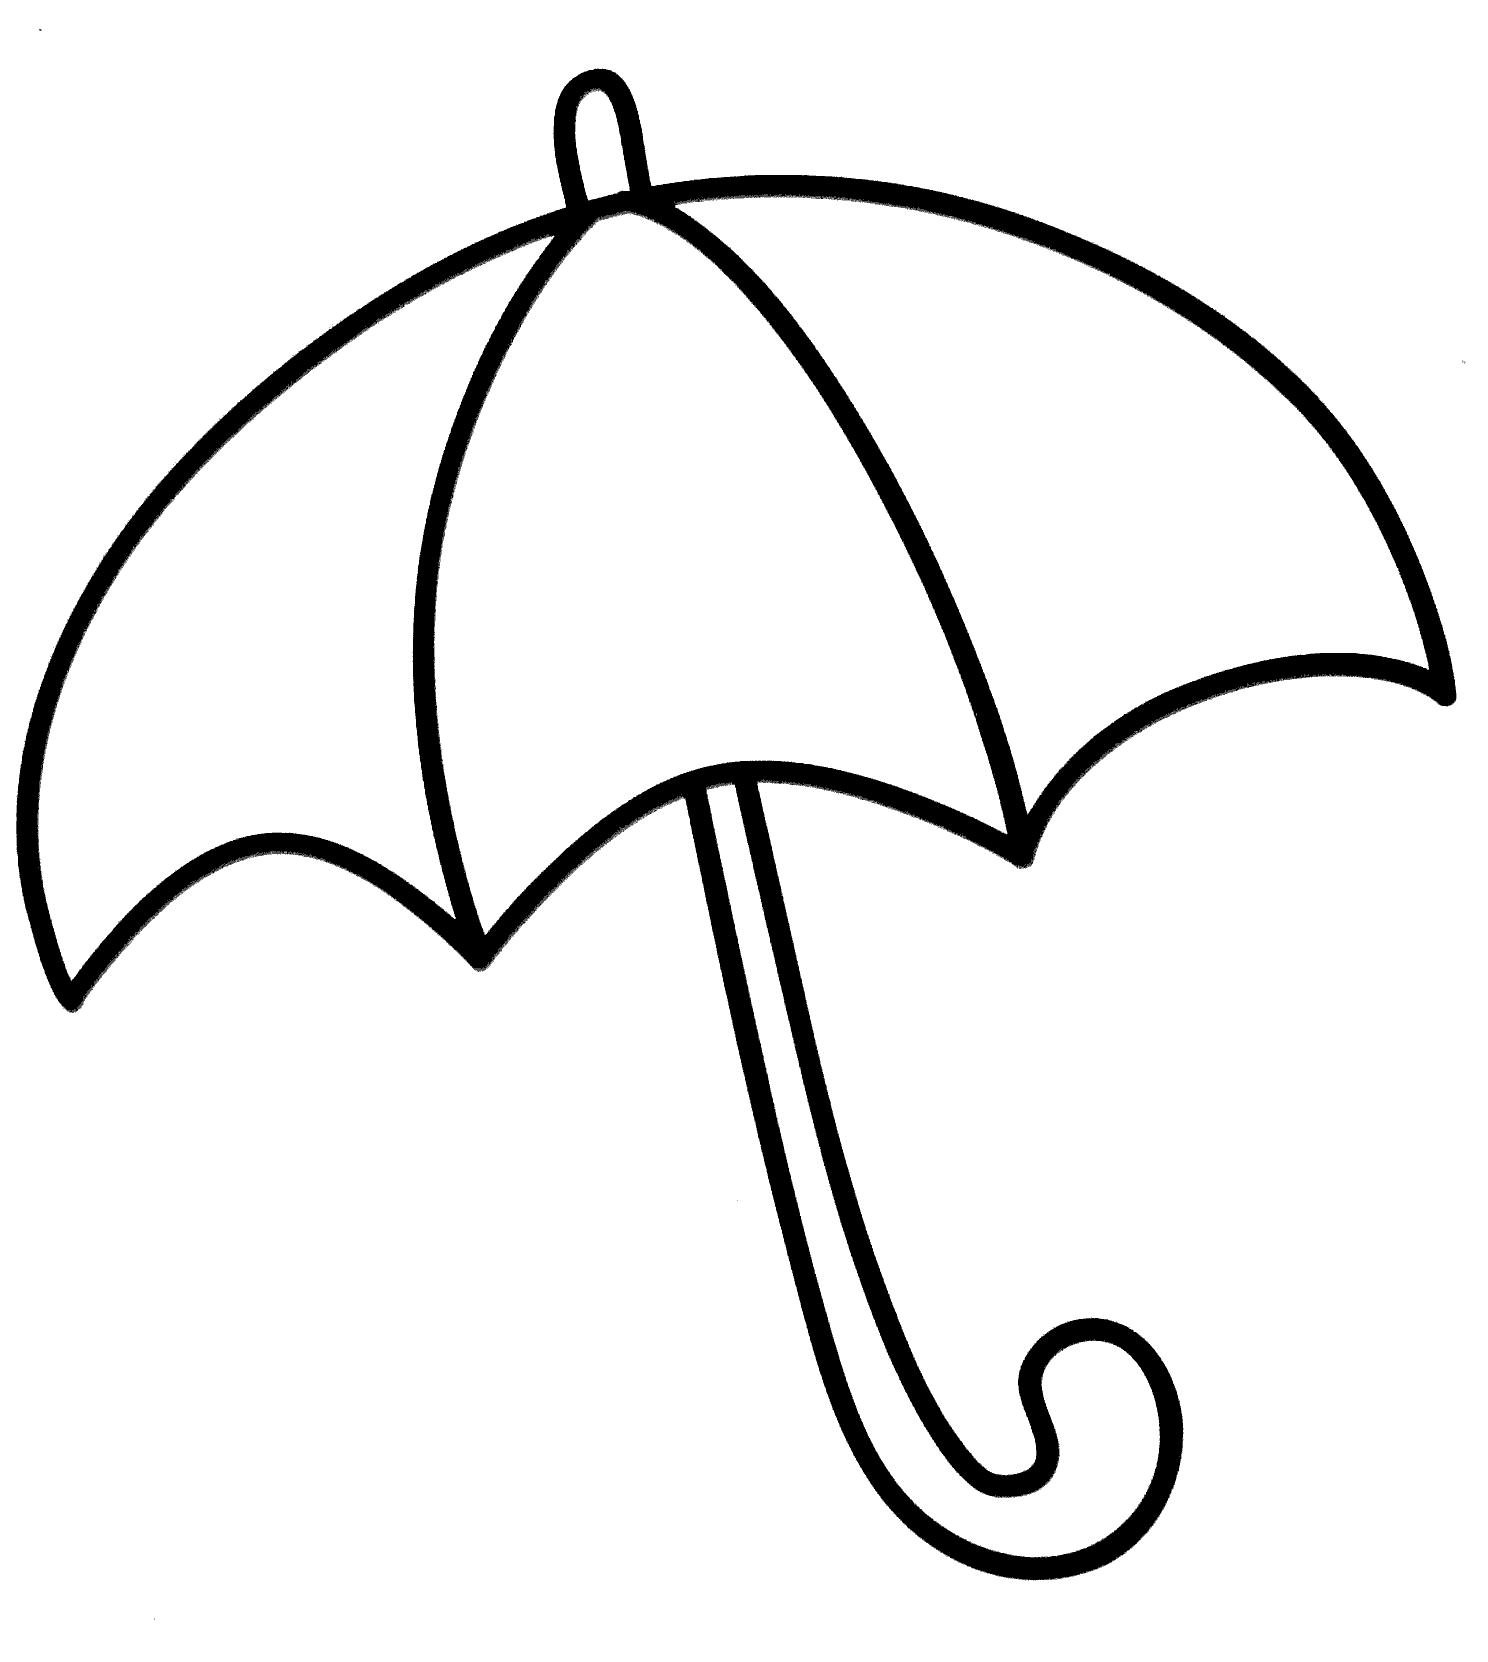 Трафареты для раскрашивания. Зонт раскраска. Раскраска зонтик. Зонт раскраска для детей. Зонтик раскраска для малышей.